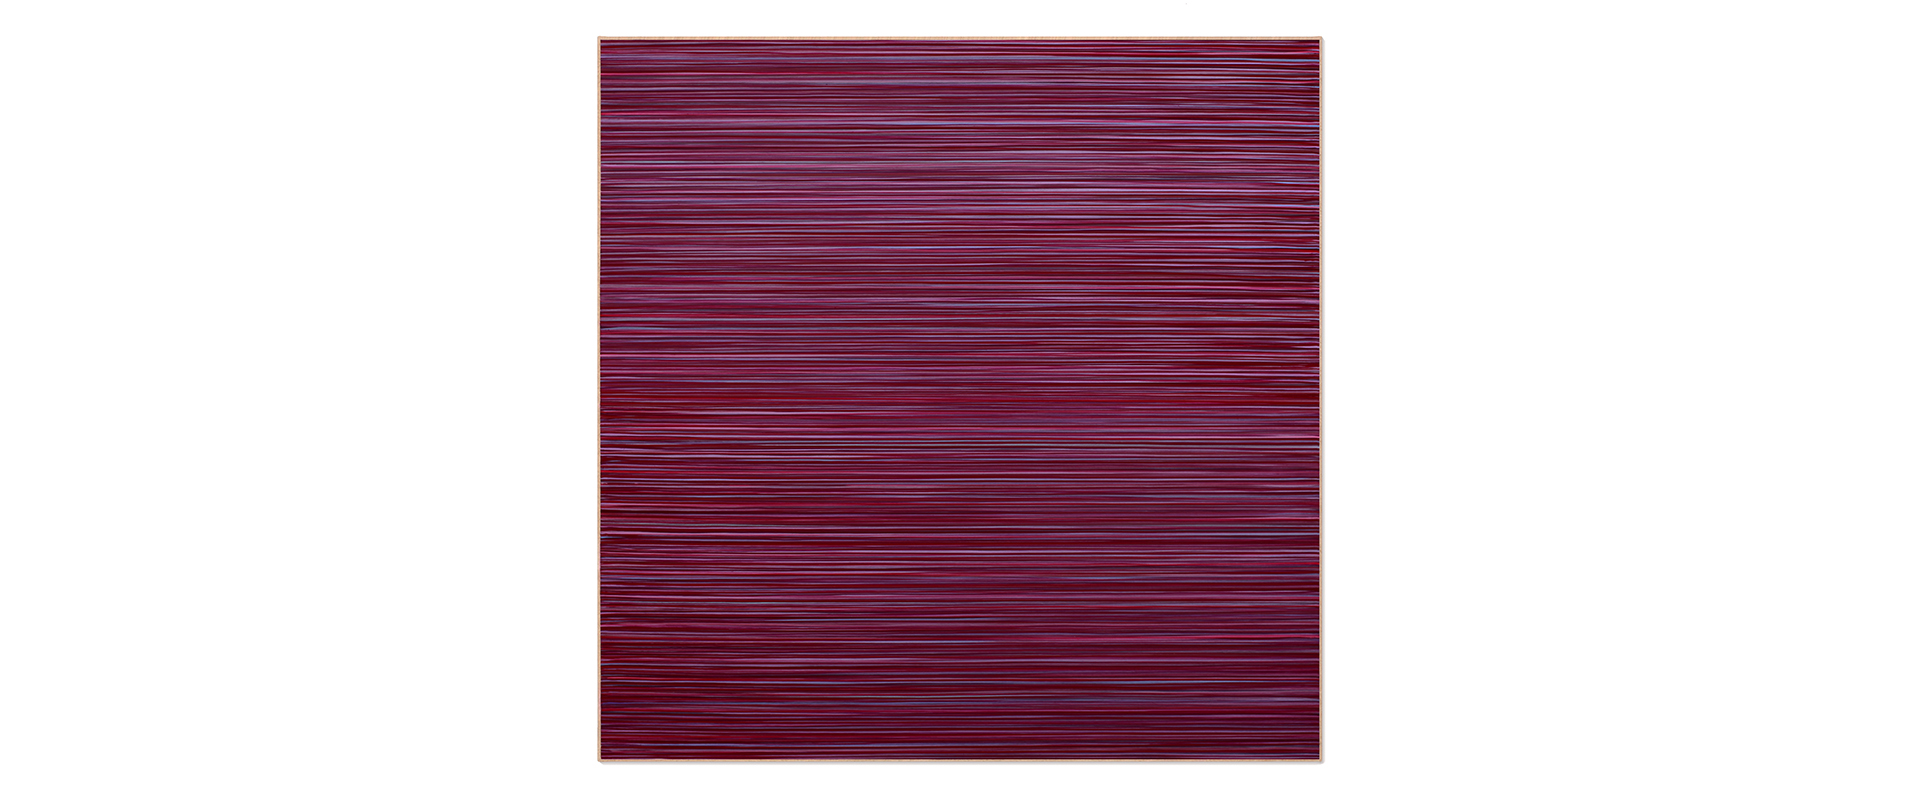 Lars Strandh, Ohne Titel (2112) – 2021, Acryl auf Leinwand, 90 x 90 cm